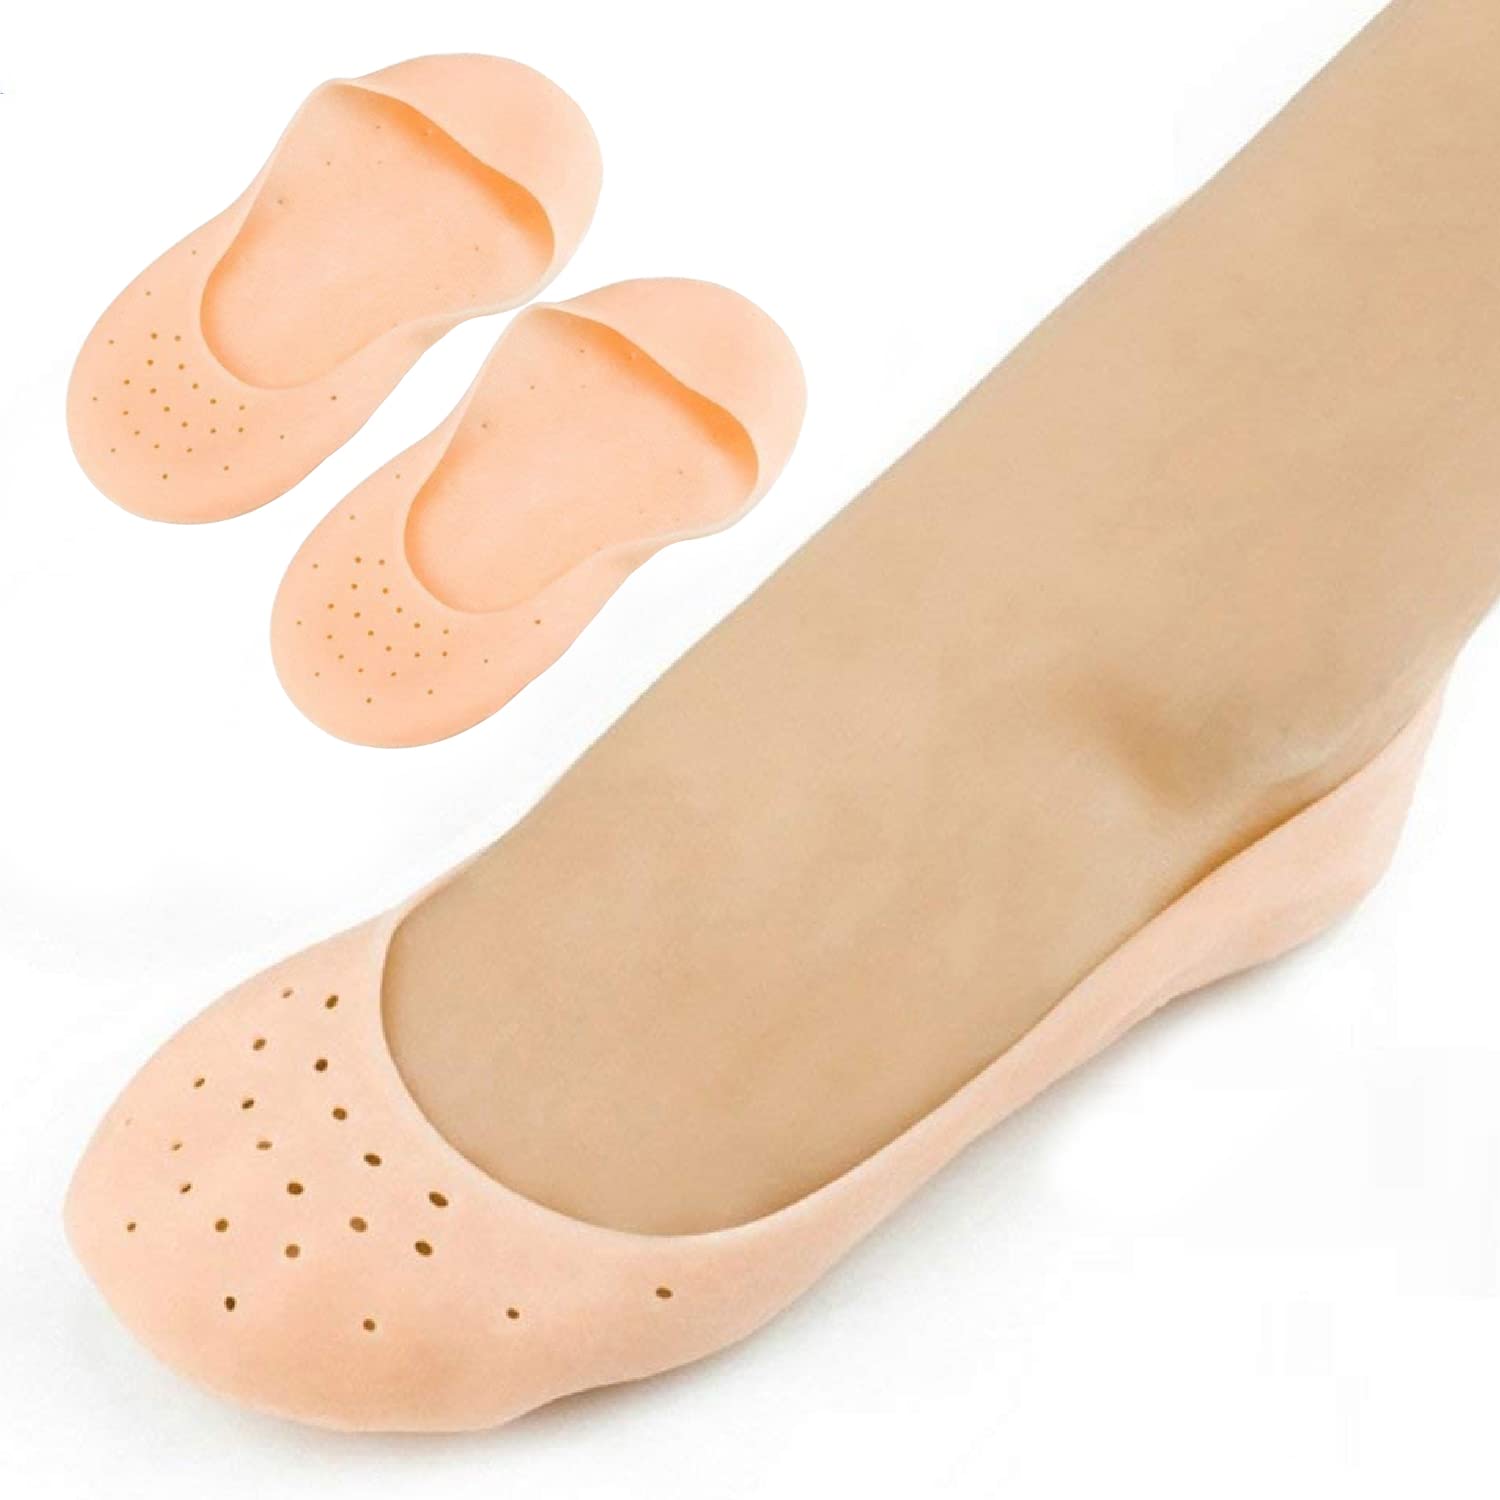 Dr Foot Silicone Moisturizing Heel Socks | For Dry, Cracked Heels, Rough Skin, Dead Skin, Calluses Remover | For Both Men & Women | Full Length, Large Size – 1 Pair